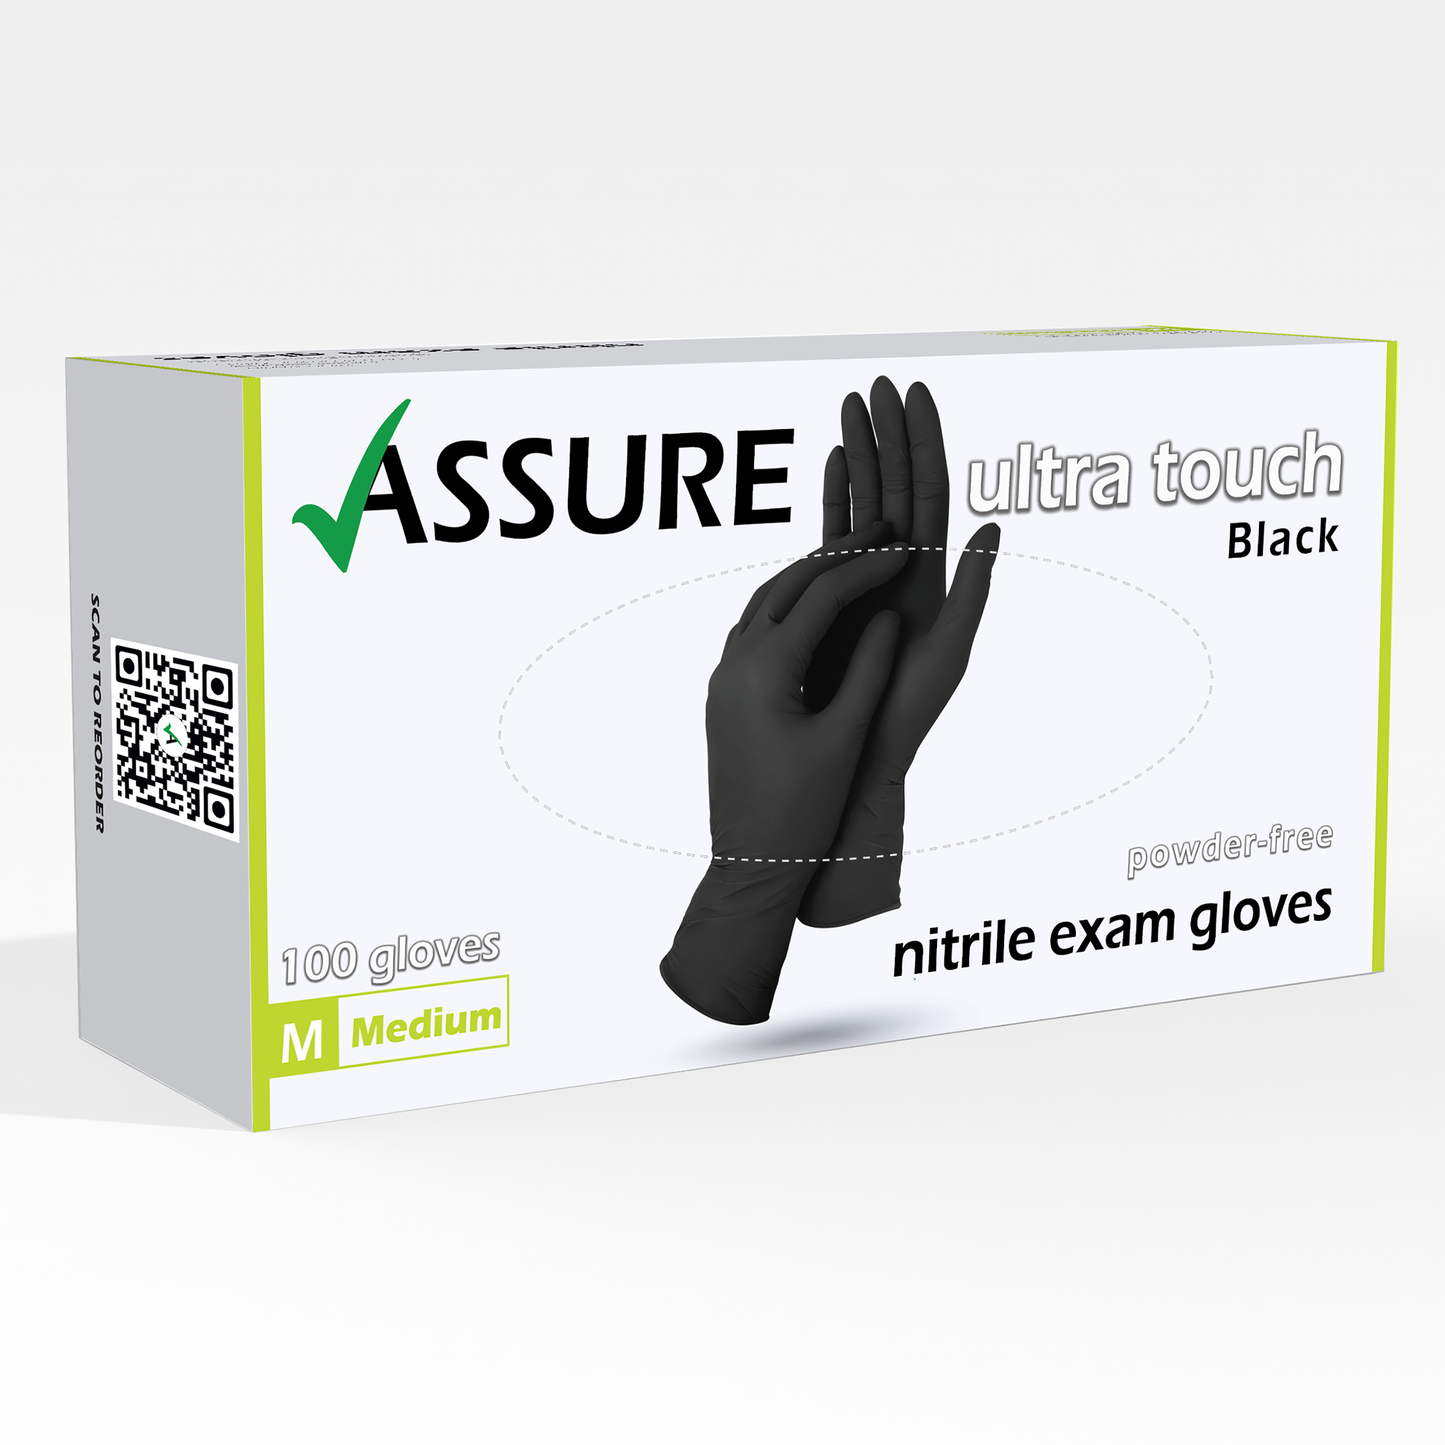 ASSURE Black Nitrile Gloves $5.50 per box of 100, 10 boxes per carton